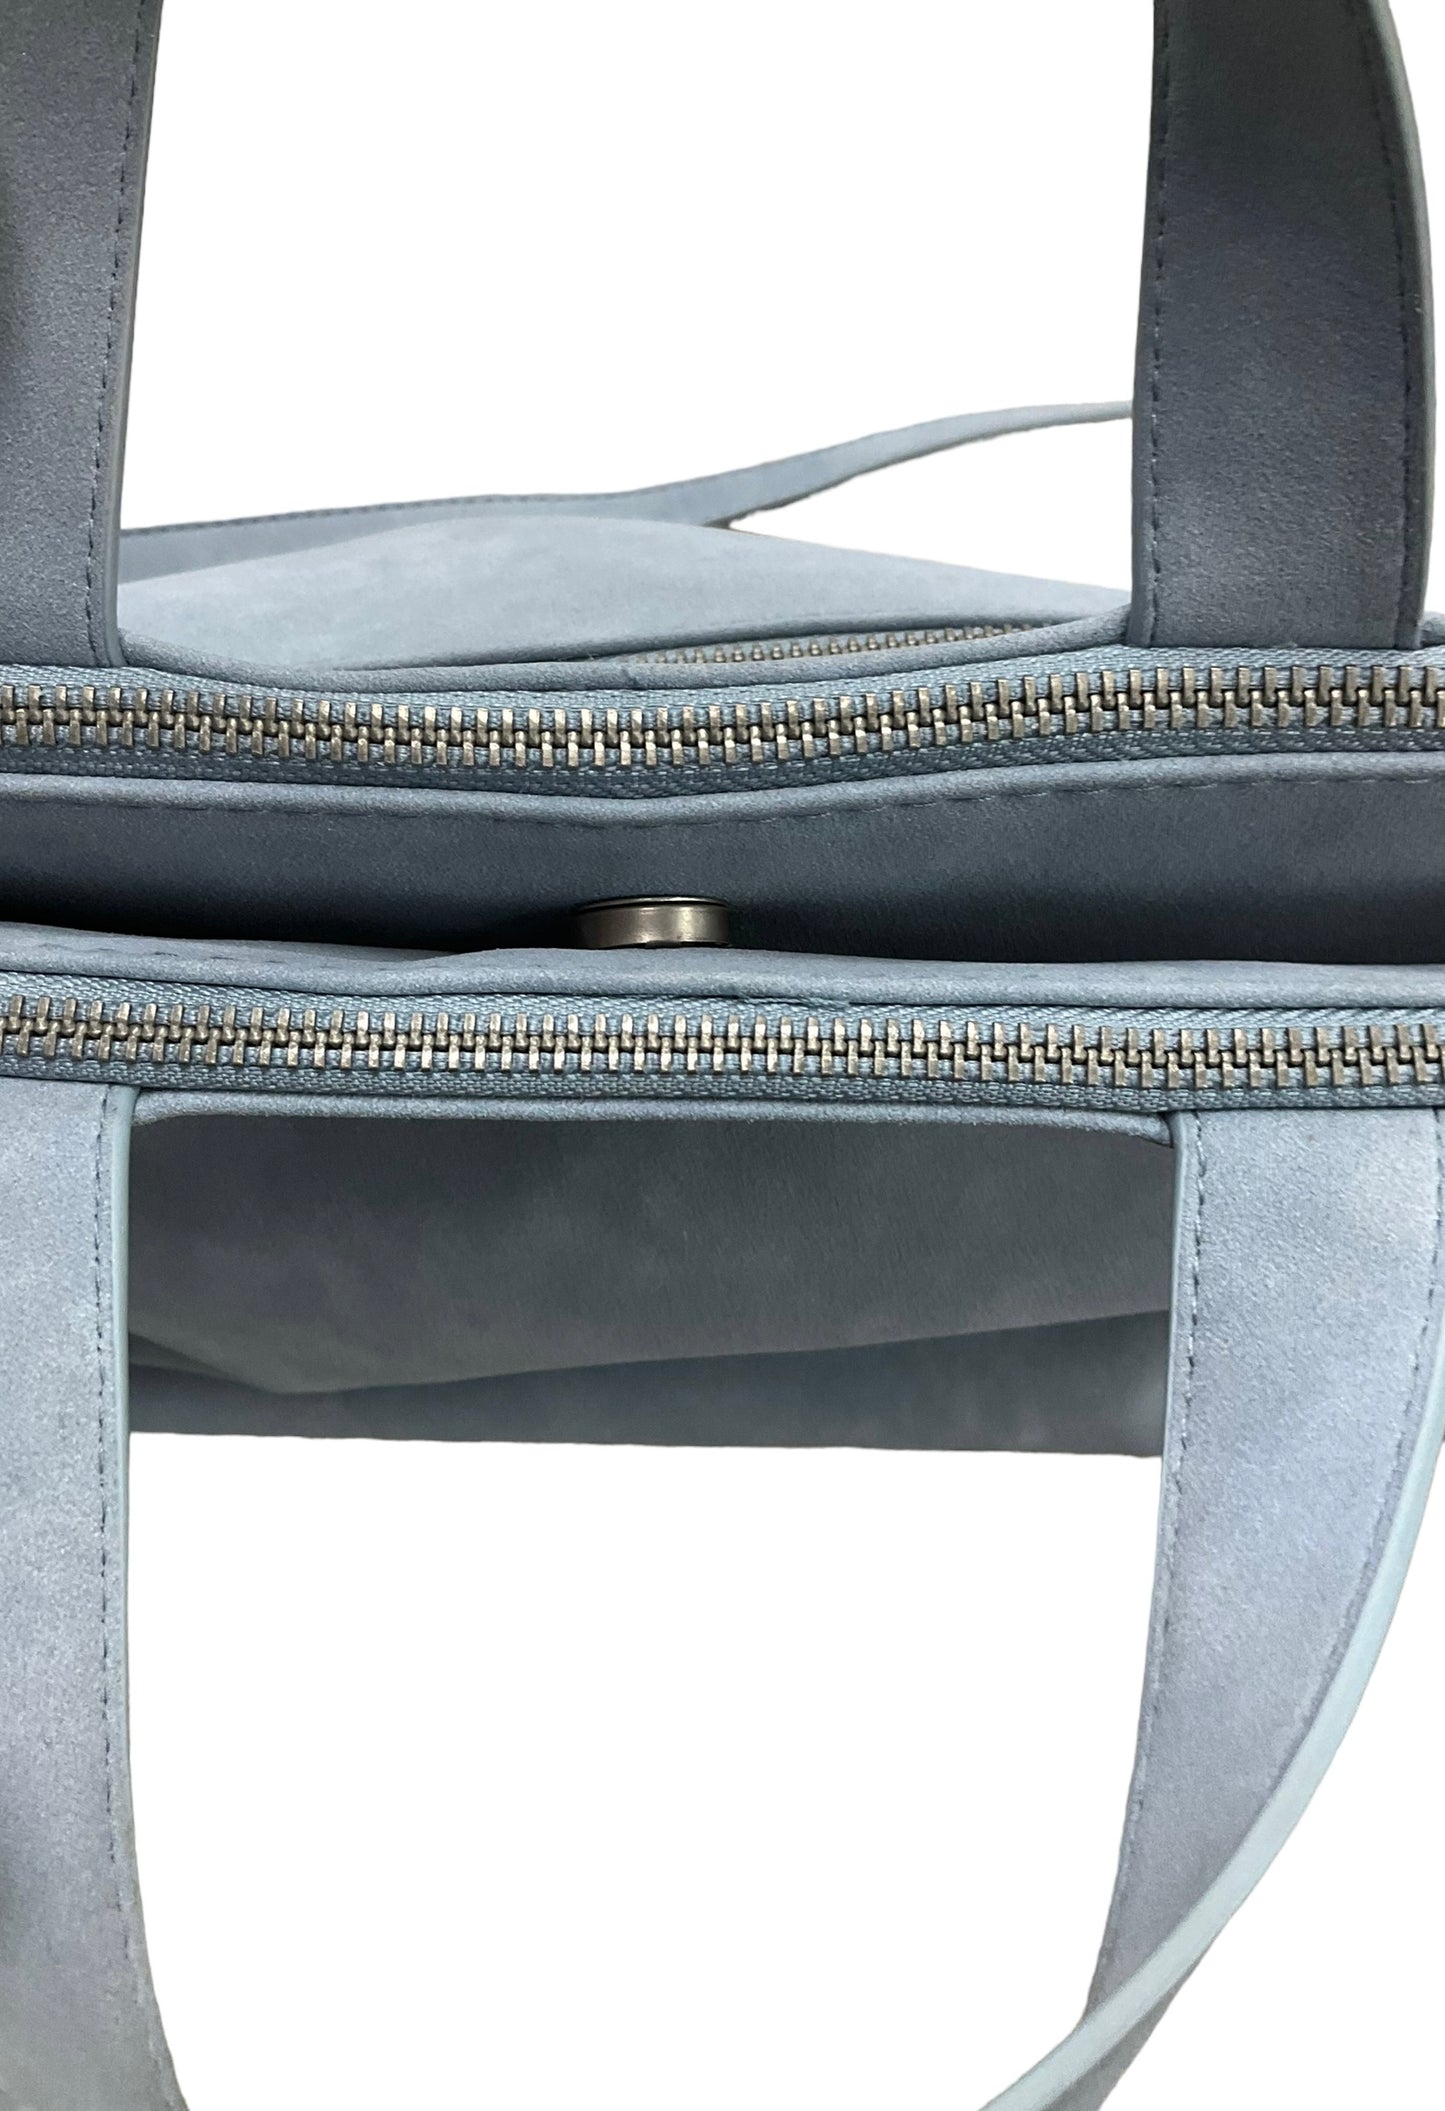 Handbag By Universal Thread  Size: Large